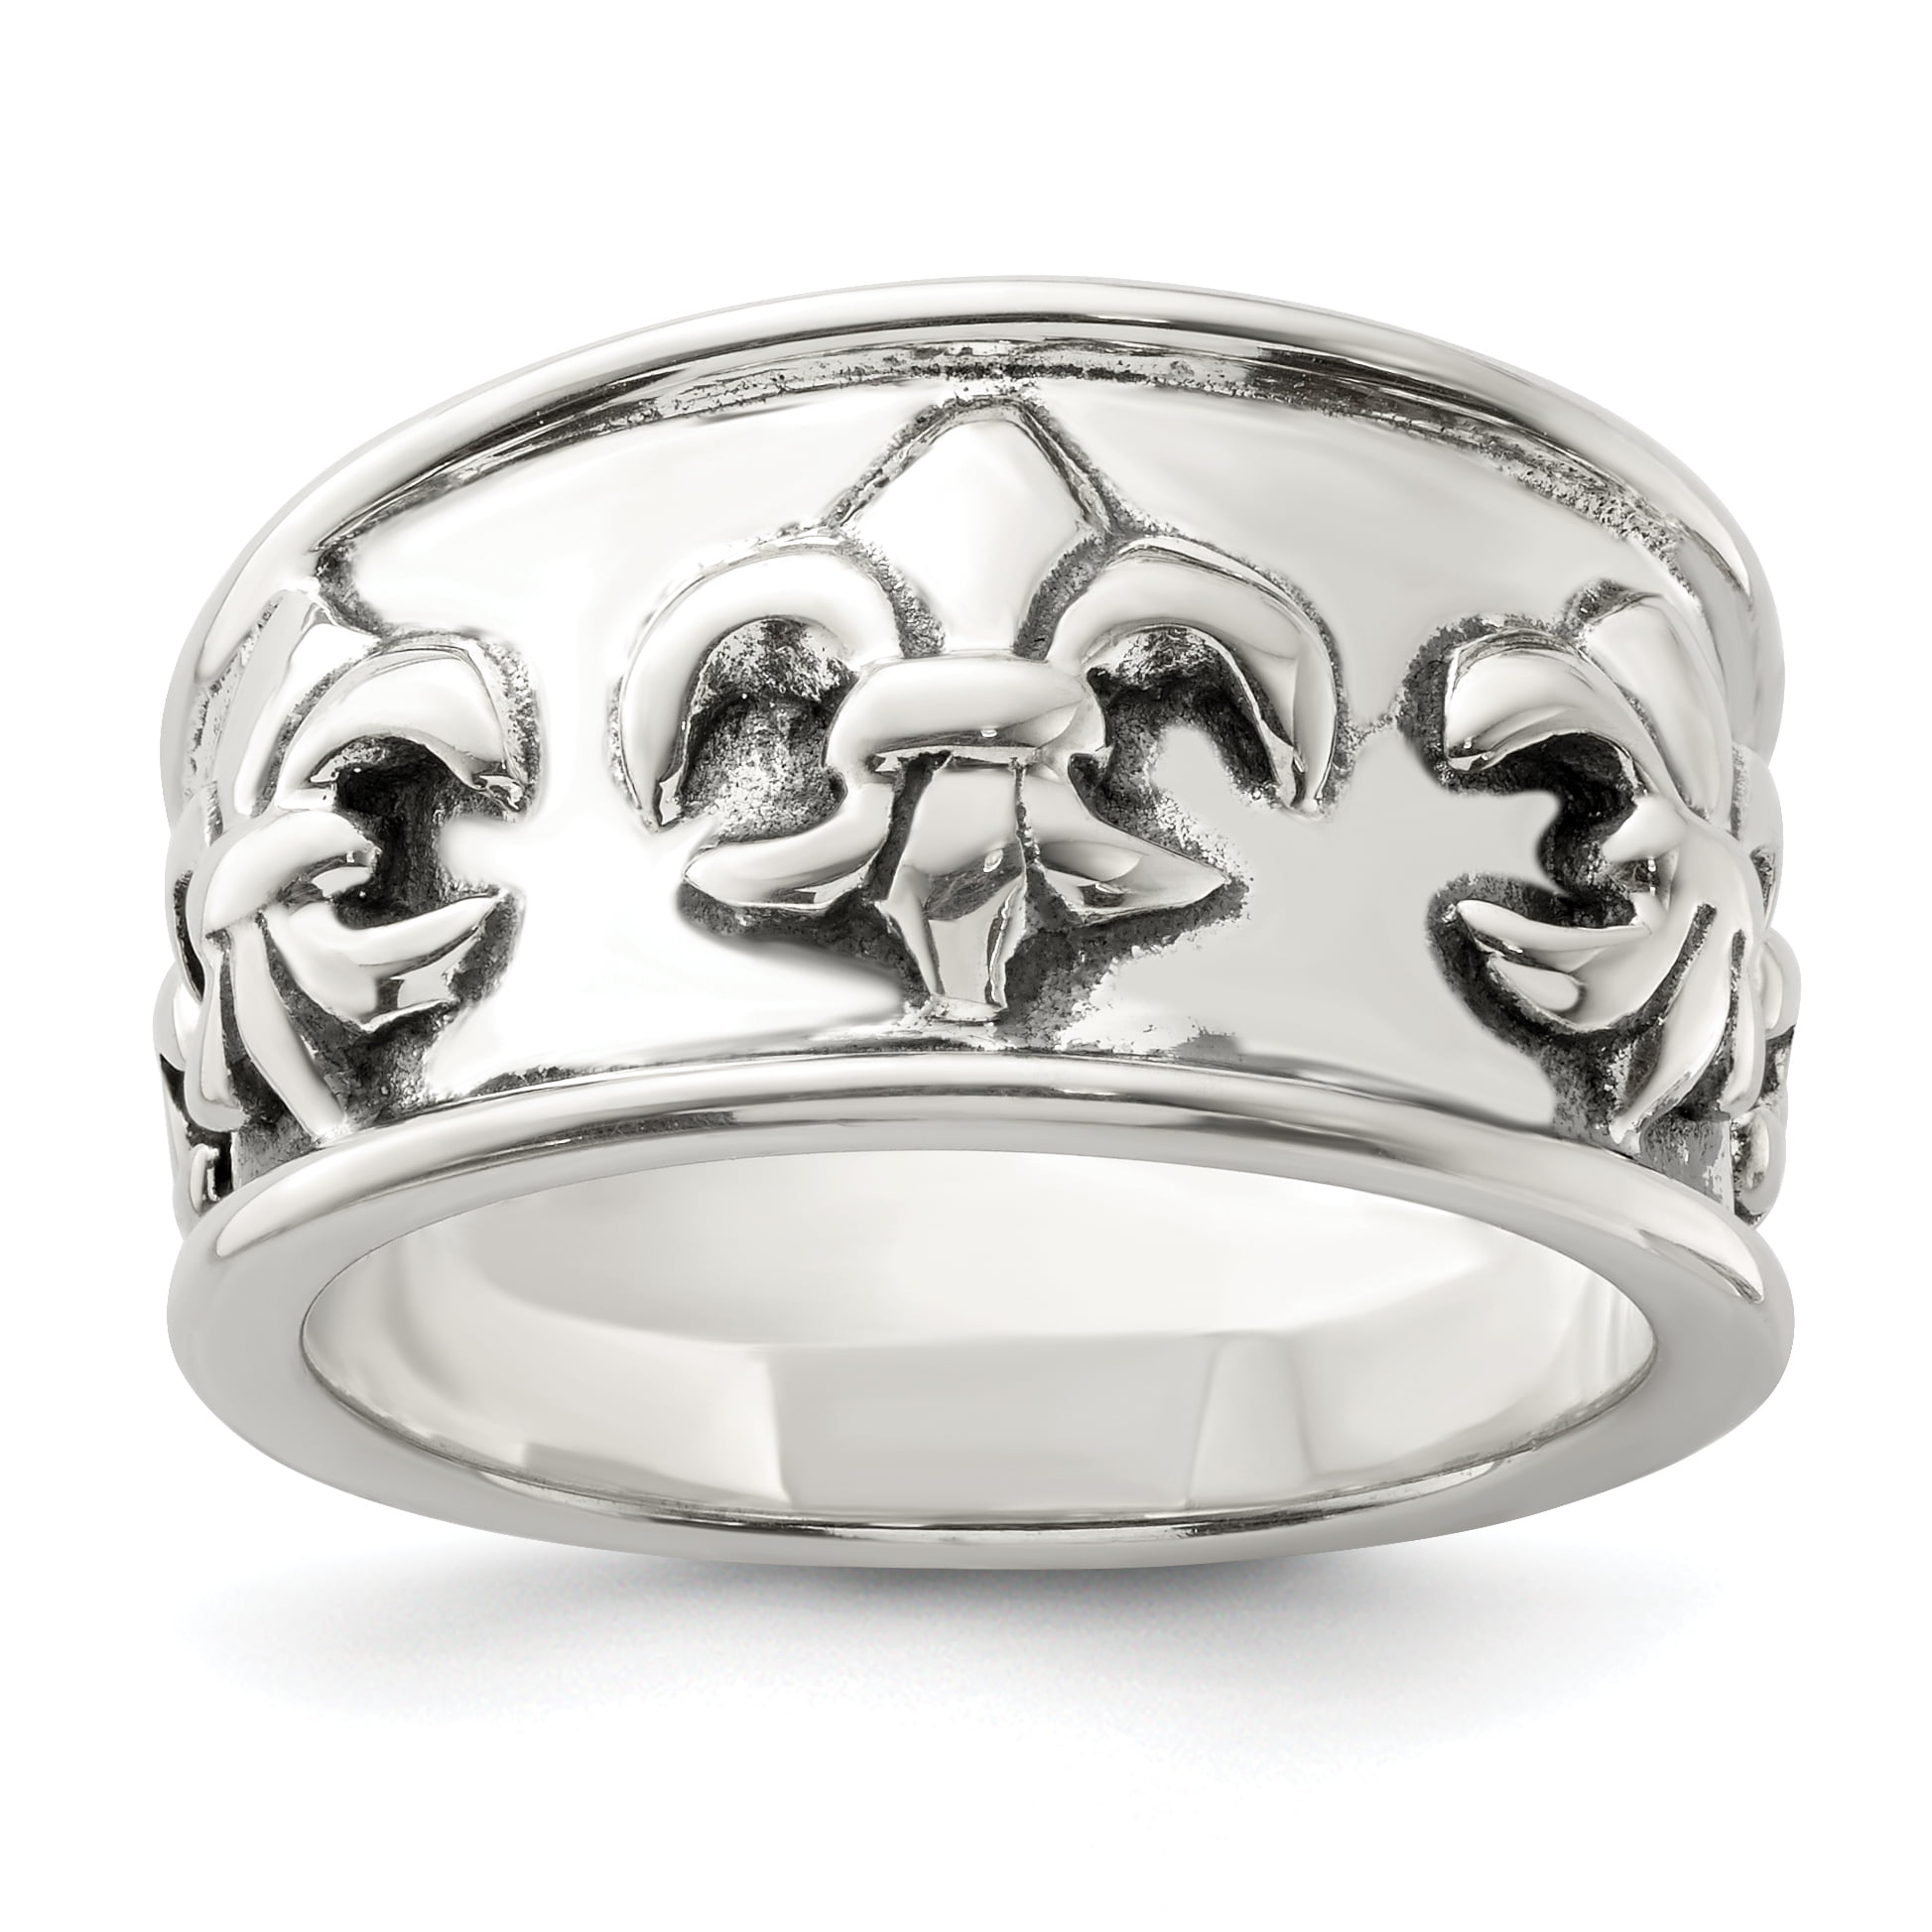 R707 Details about   Sterling Silver Fleur de Lis Band Ring